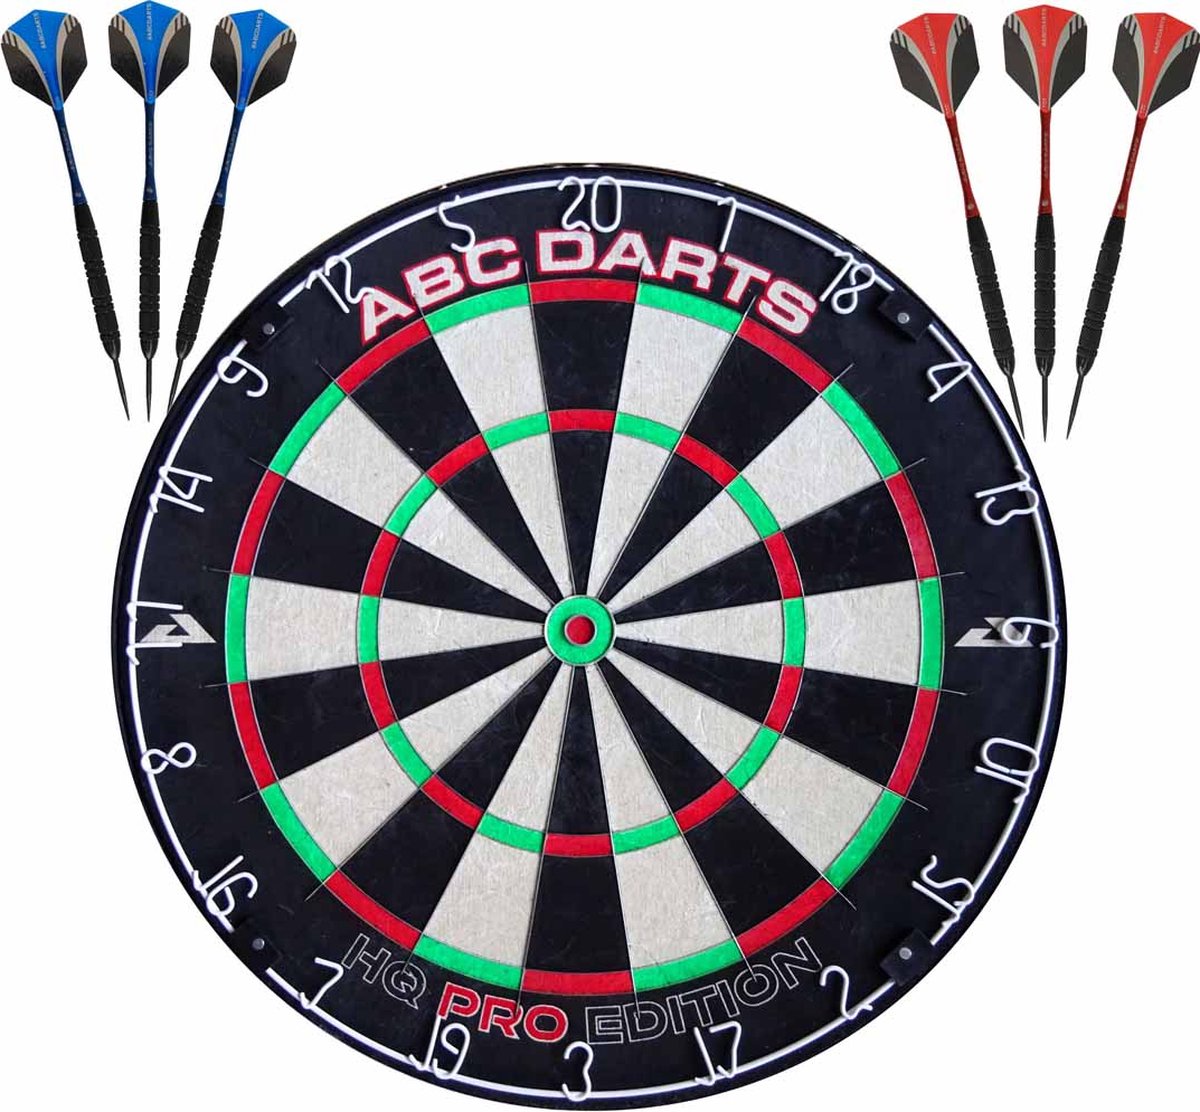 ABC Darts - Dartbord HQ Pro Edition + 2 Sets 23 gram Brass Dartpijlen - ABC Darts